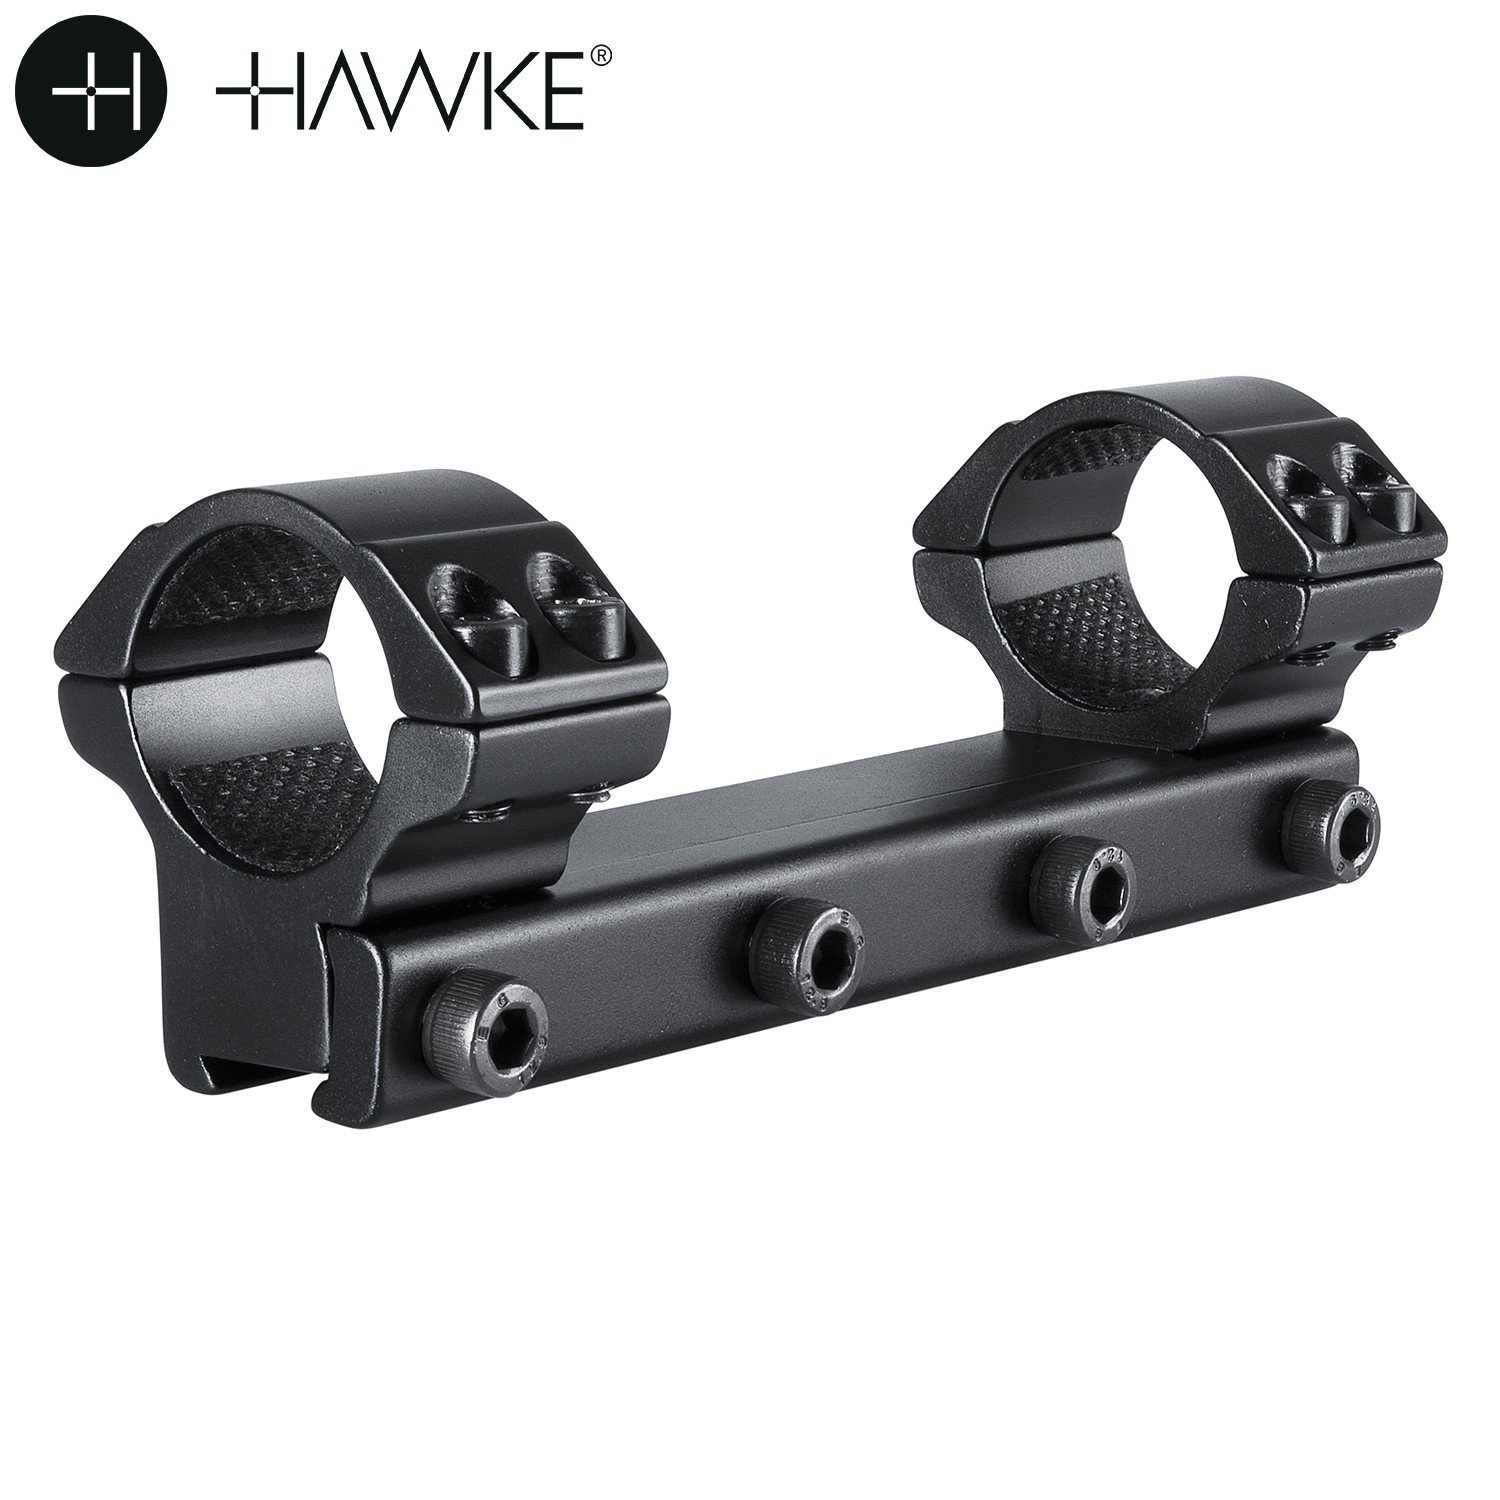 Comprar en linea Visor Hawke Airmax 3-9X40 AO de marca HAWKE